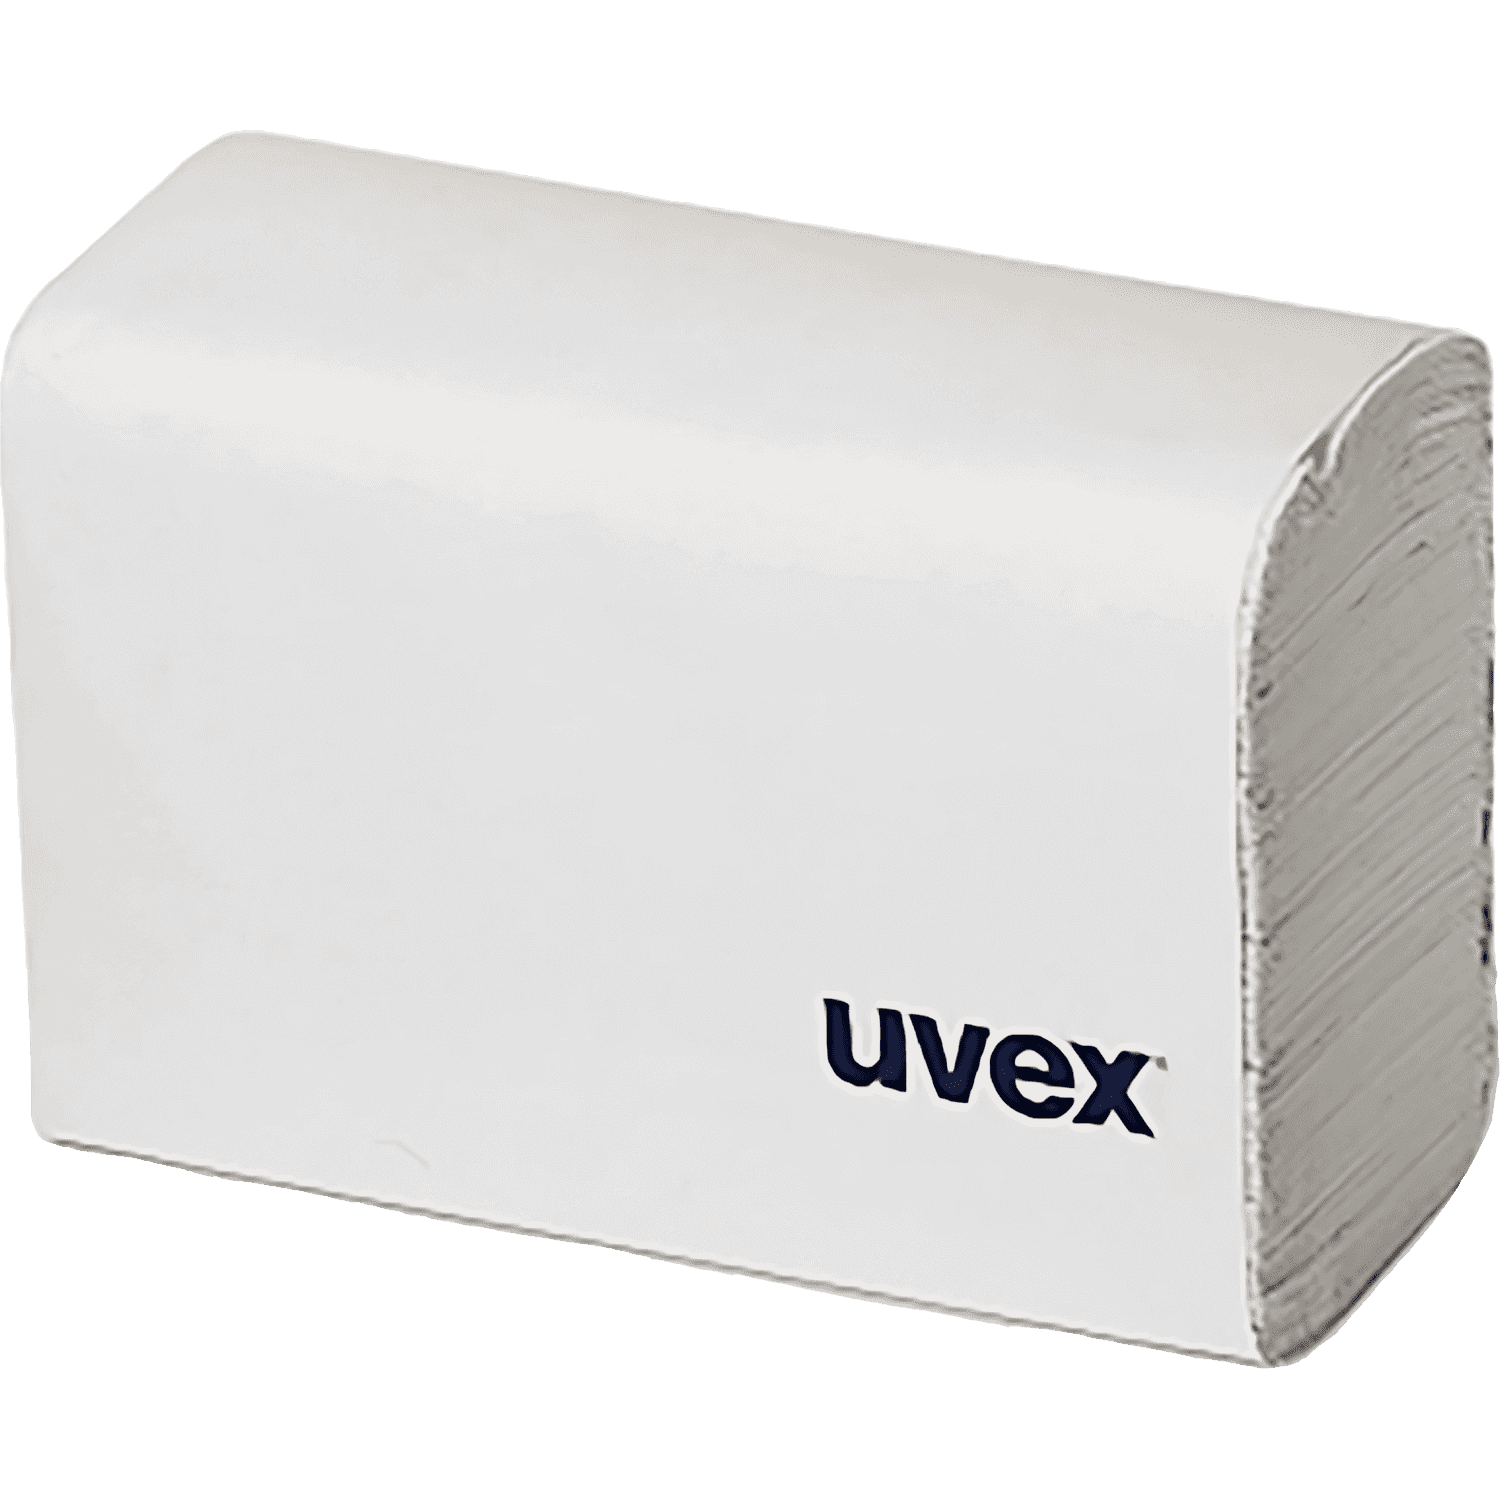 Uvex_cleaning_tissues_safeguru_01.png